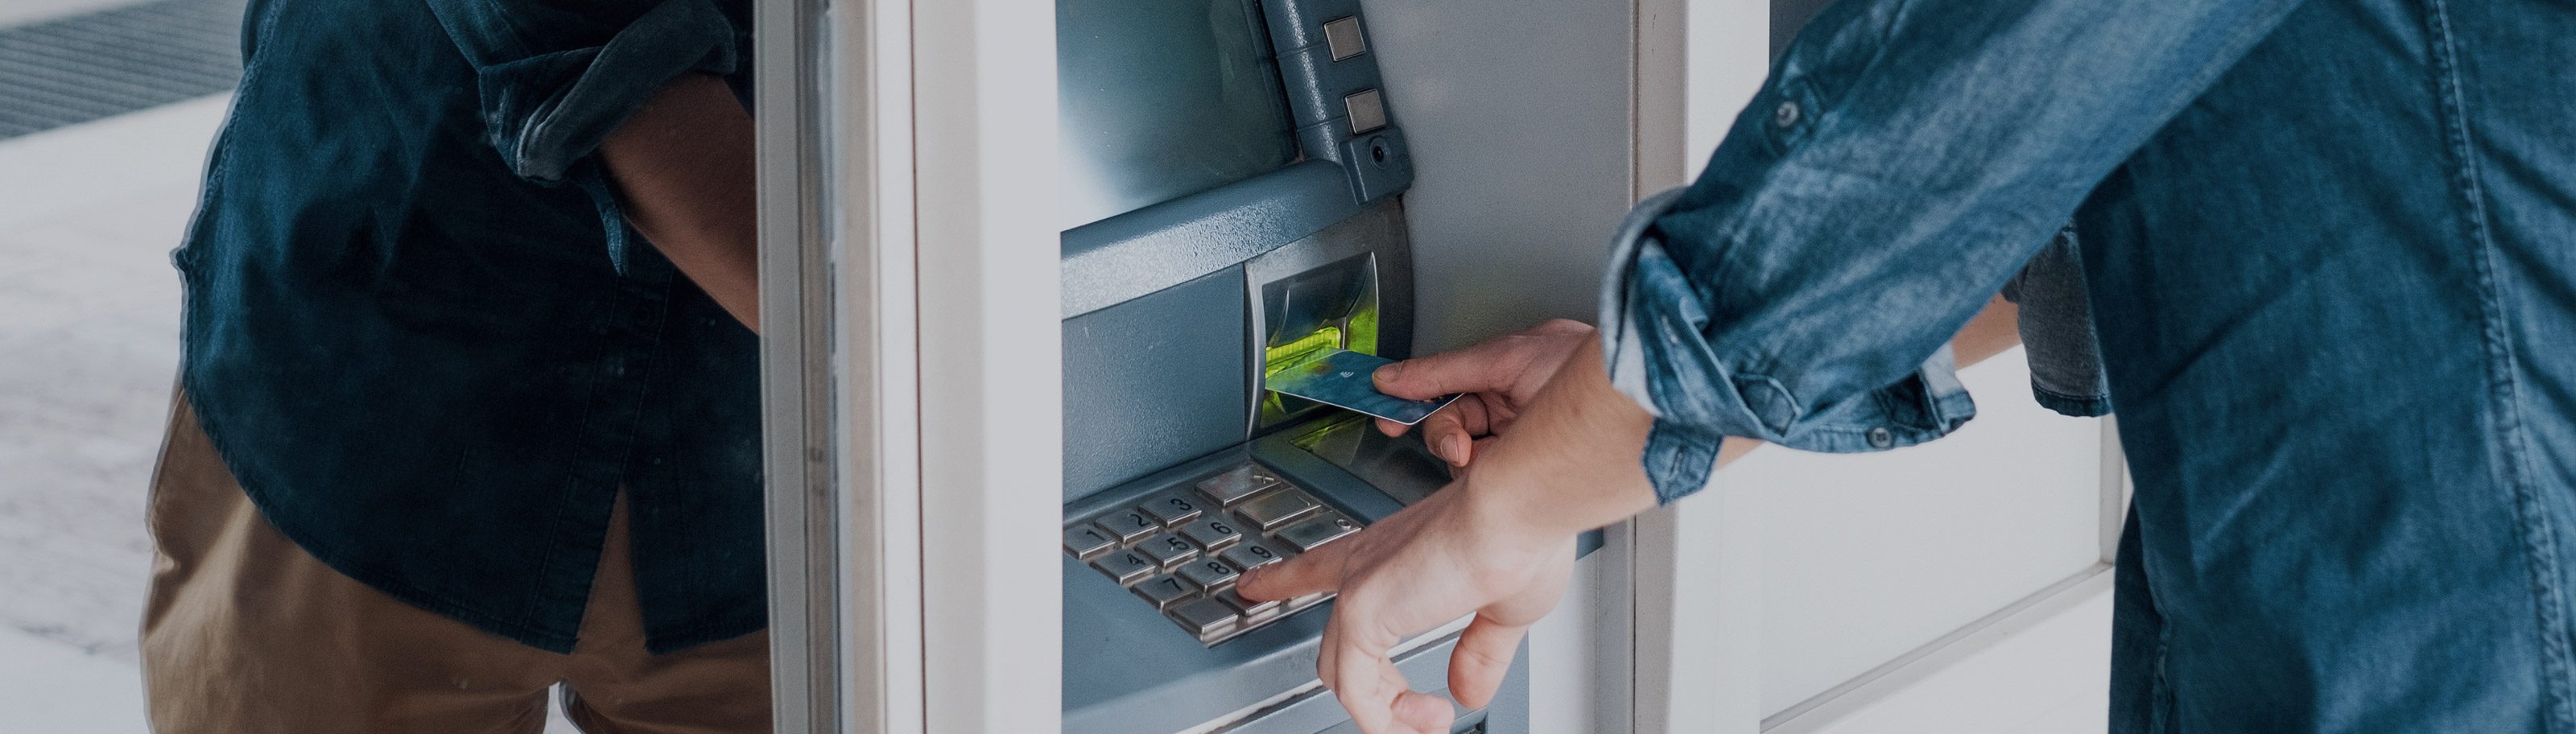 Man banking at an ATM